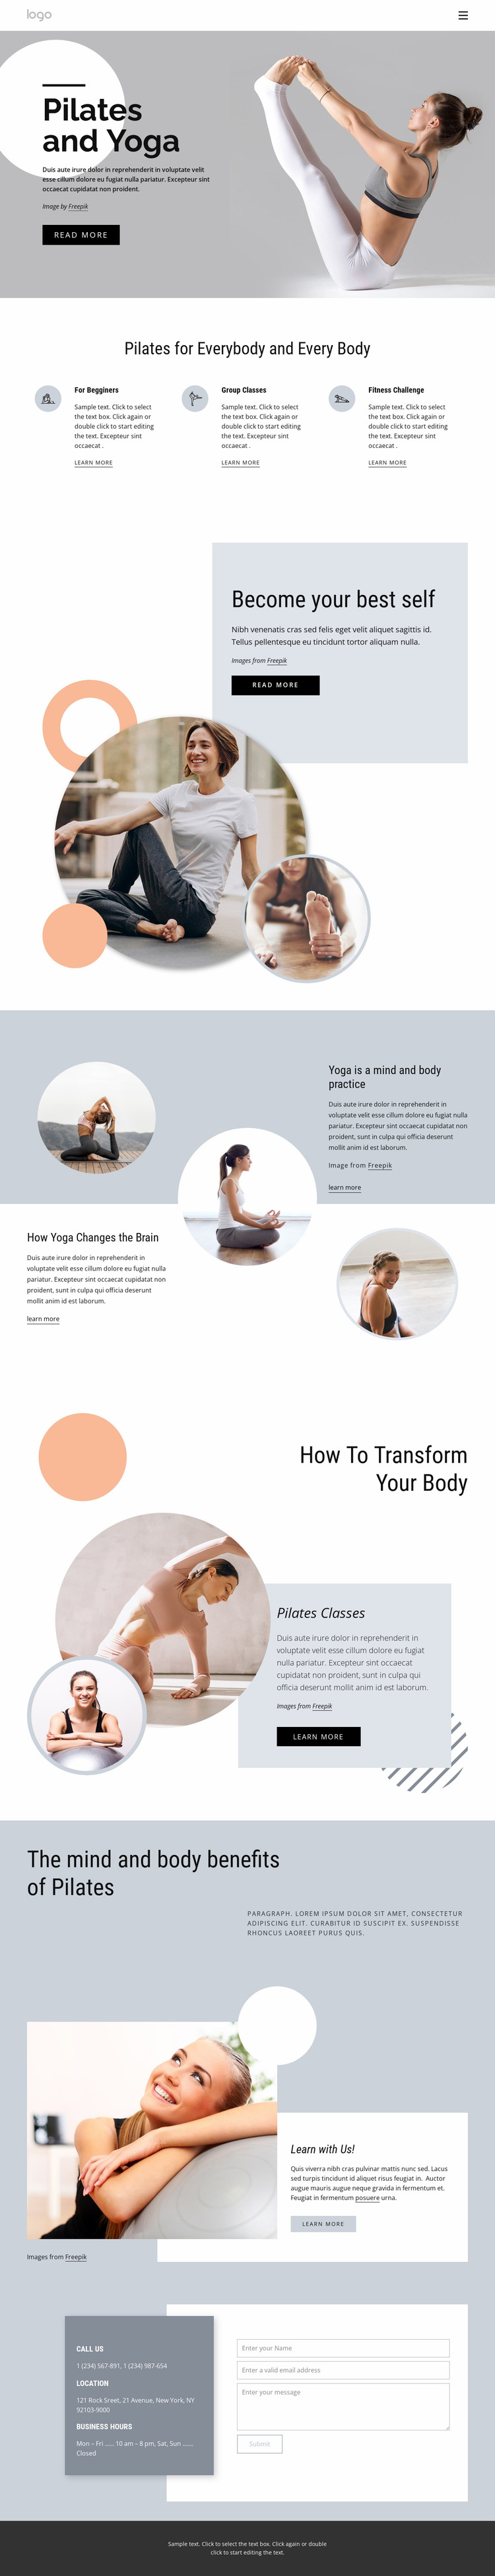 Pilates and yoga center Website Mockup